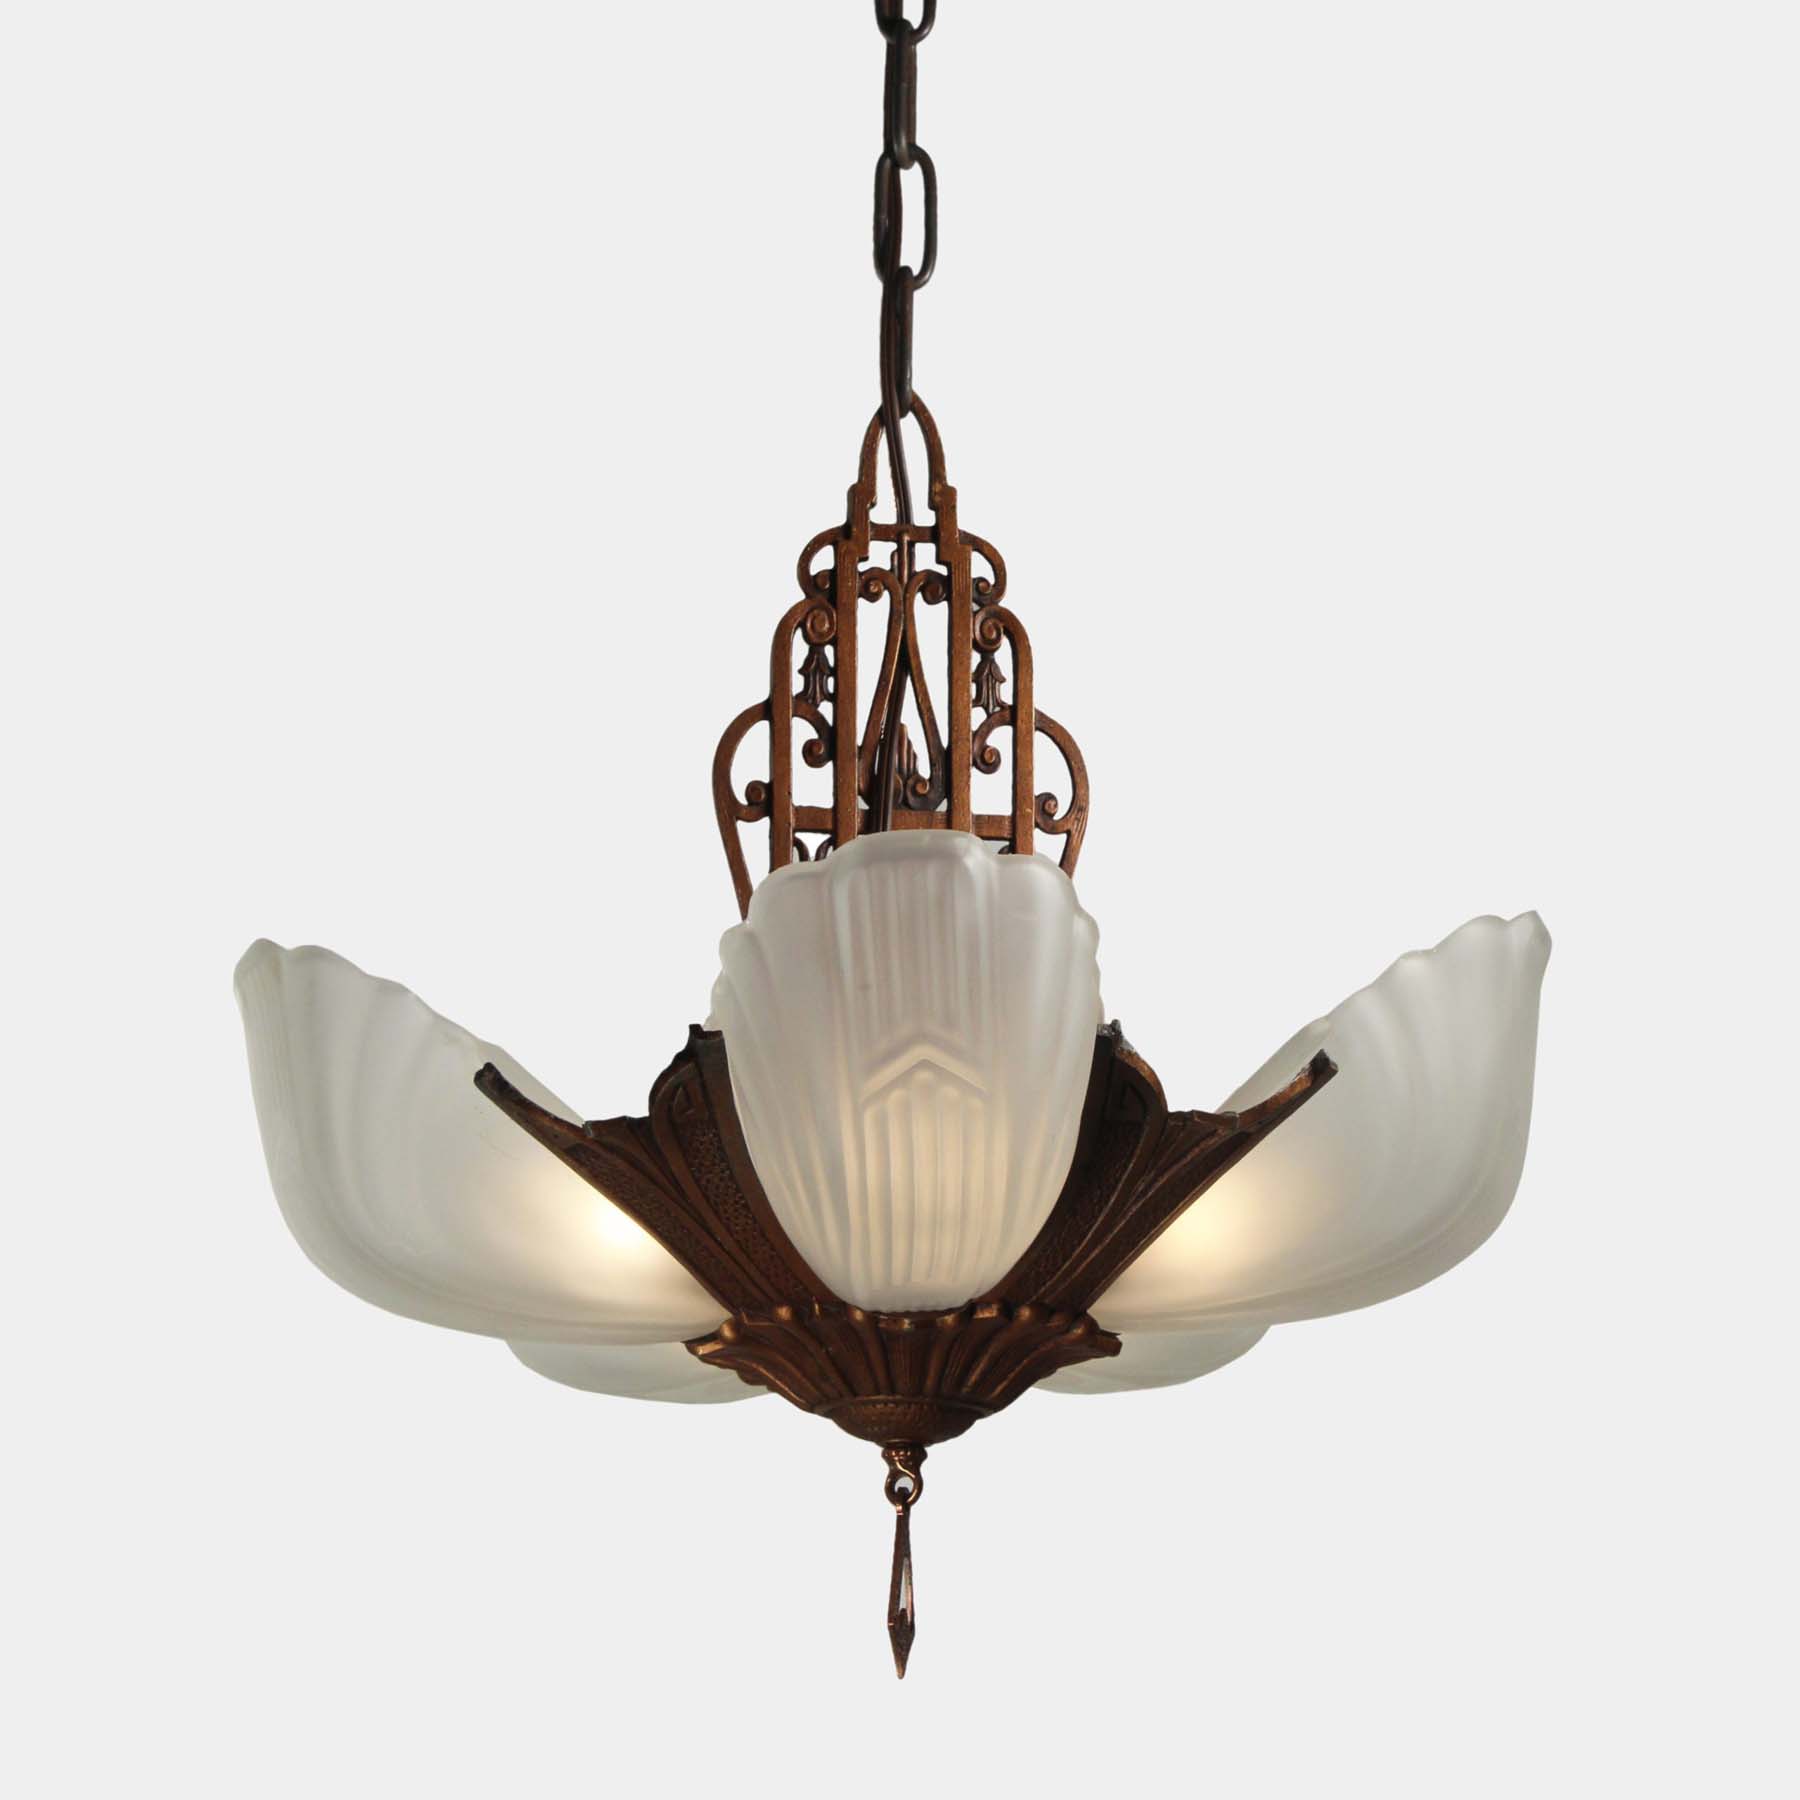 SOLD Art Deco Slip Shade Chandelier by Markel, Antique Lighting-67629